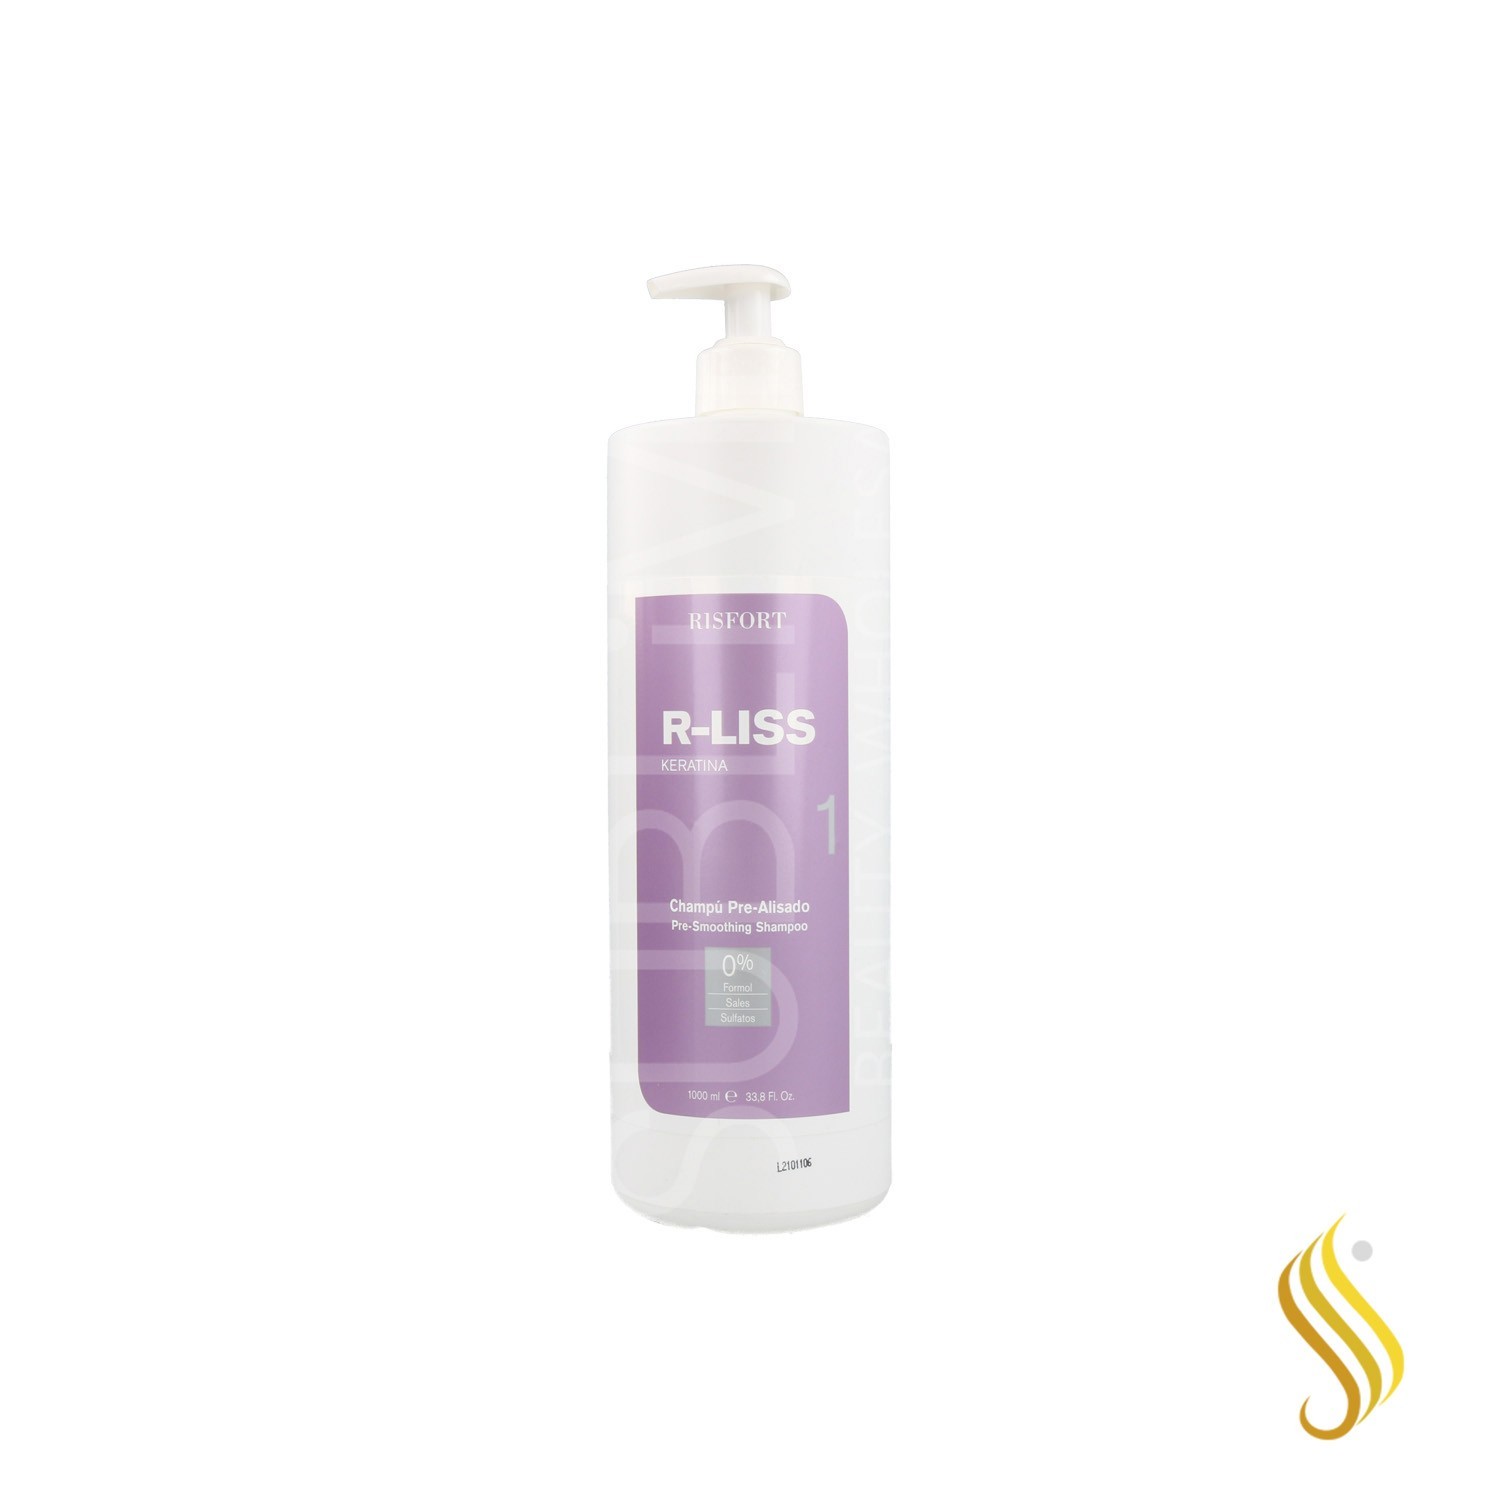 Risfort R-Liss Pre-Straightening Shampoo (1) 1000 ml